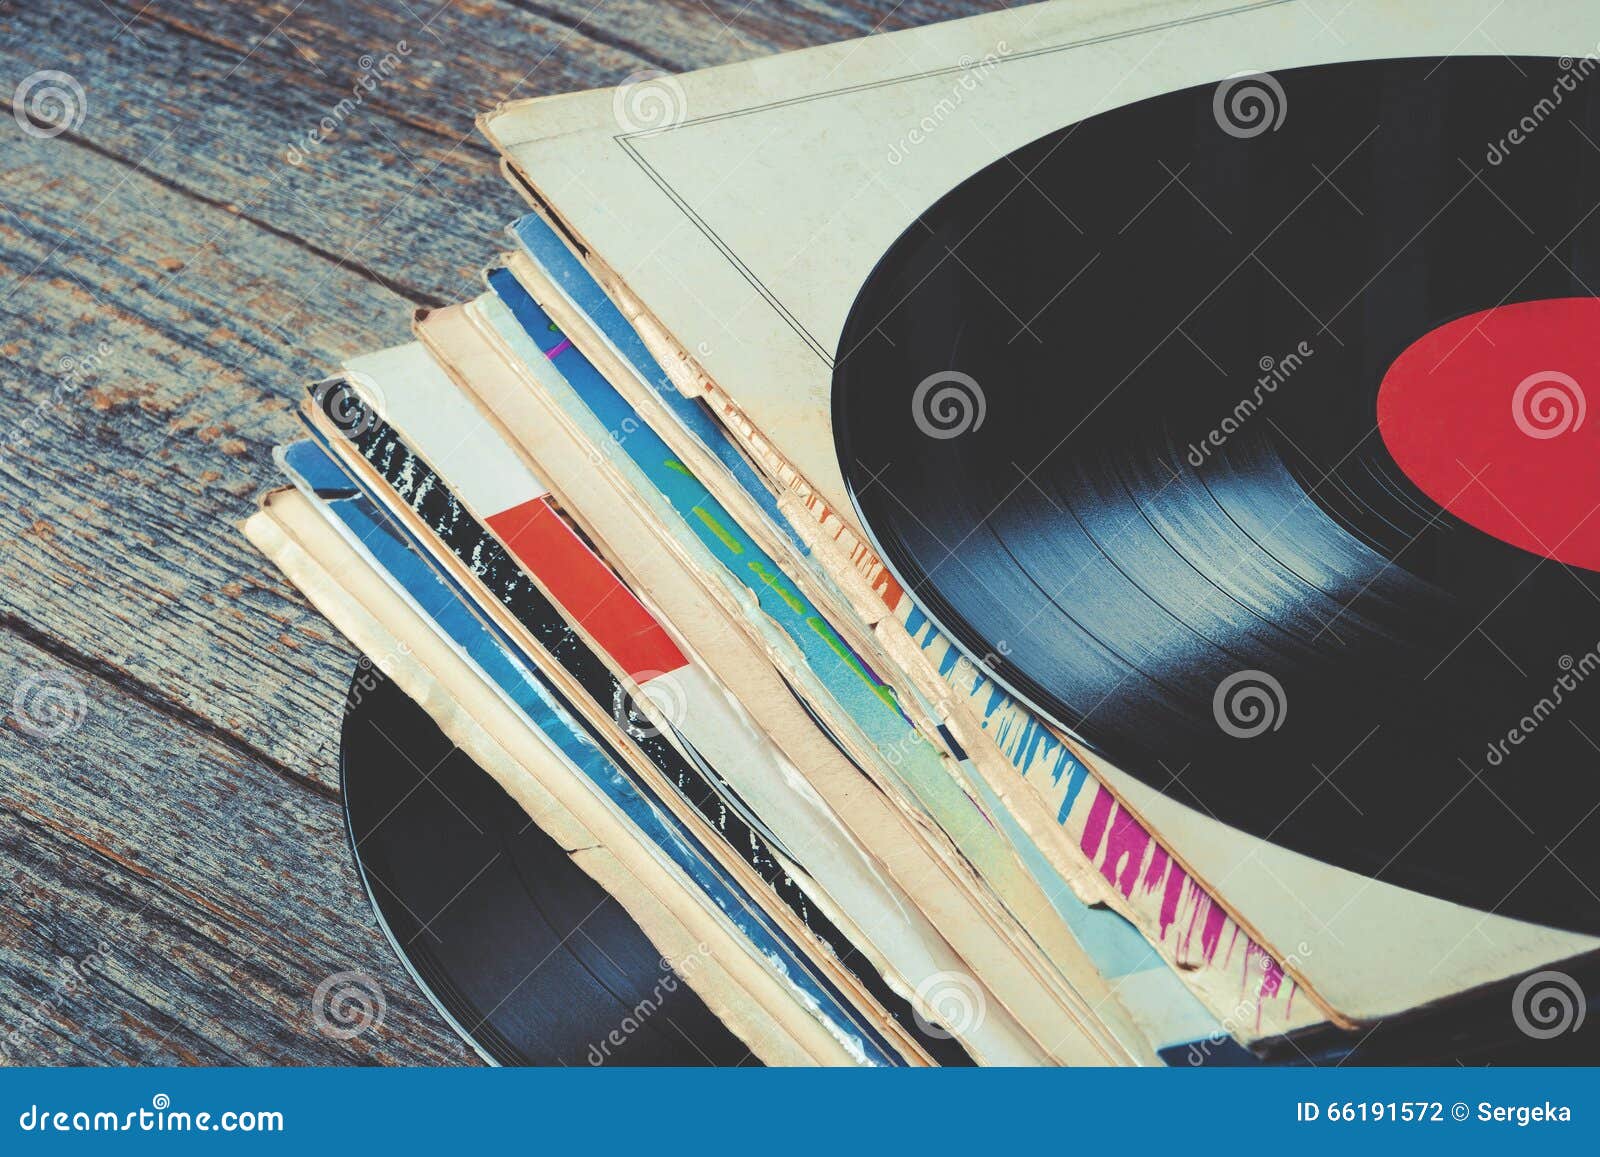 old vinyl records